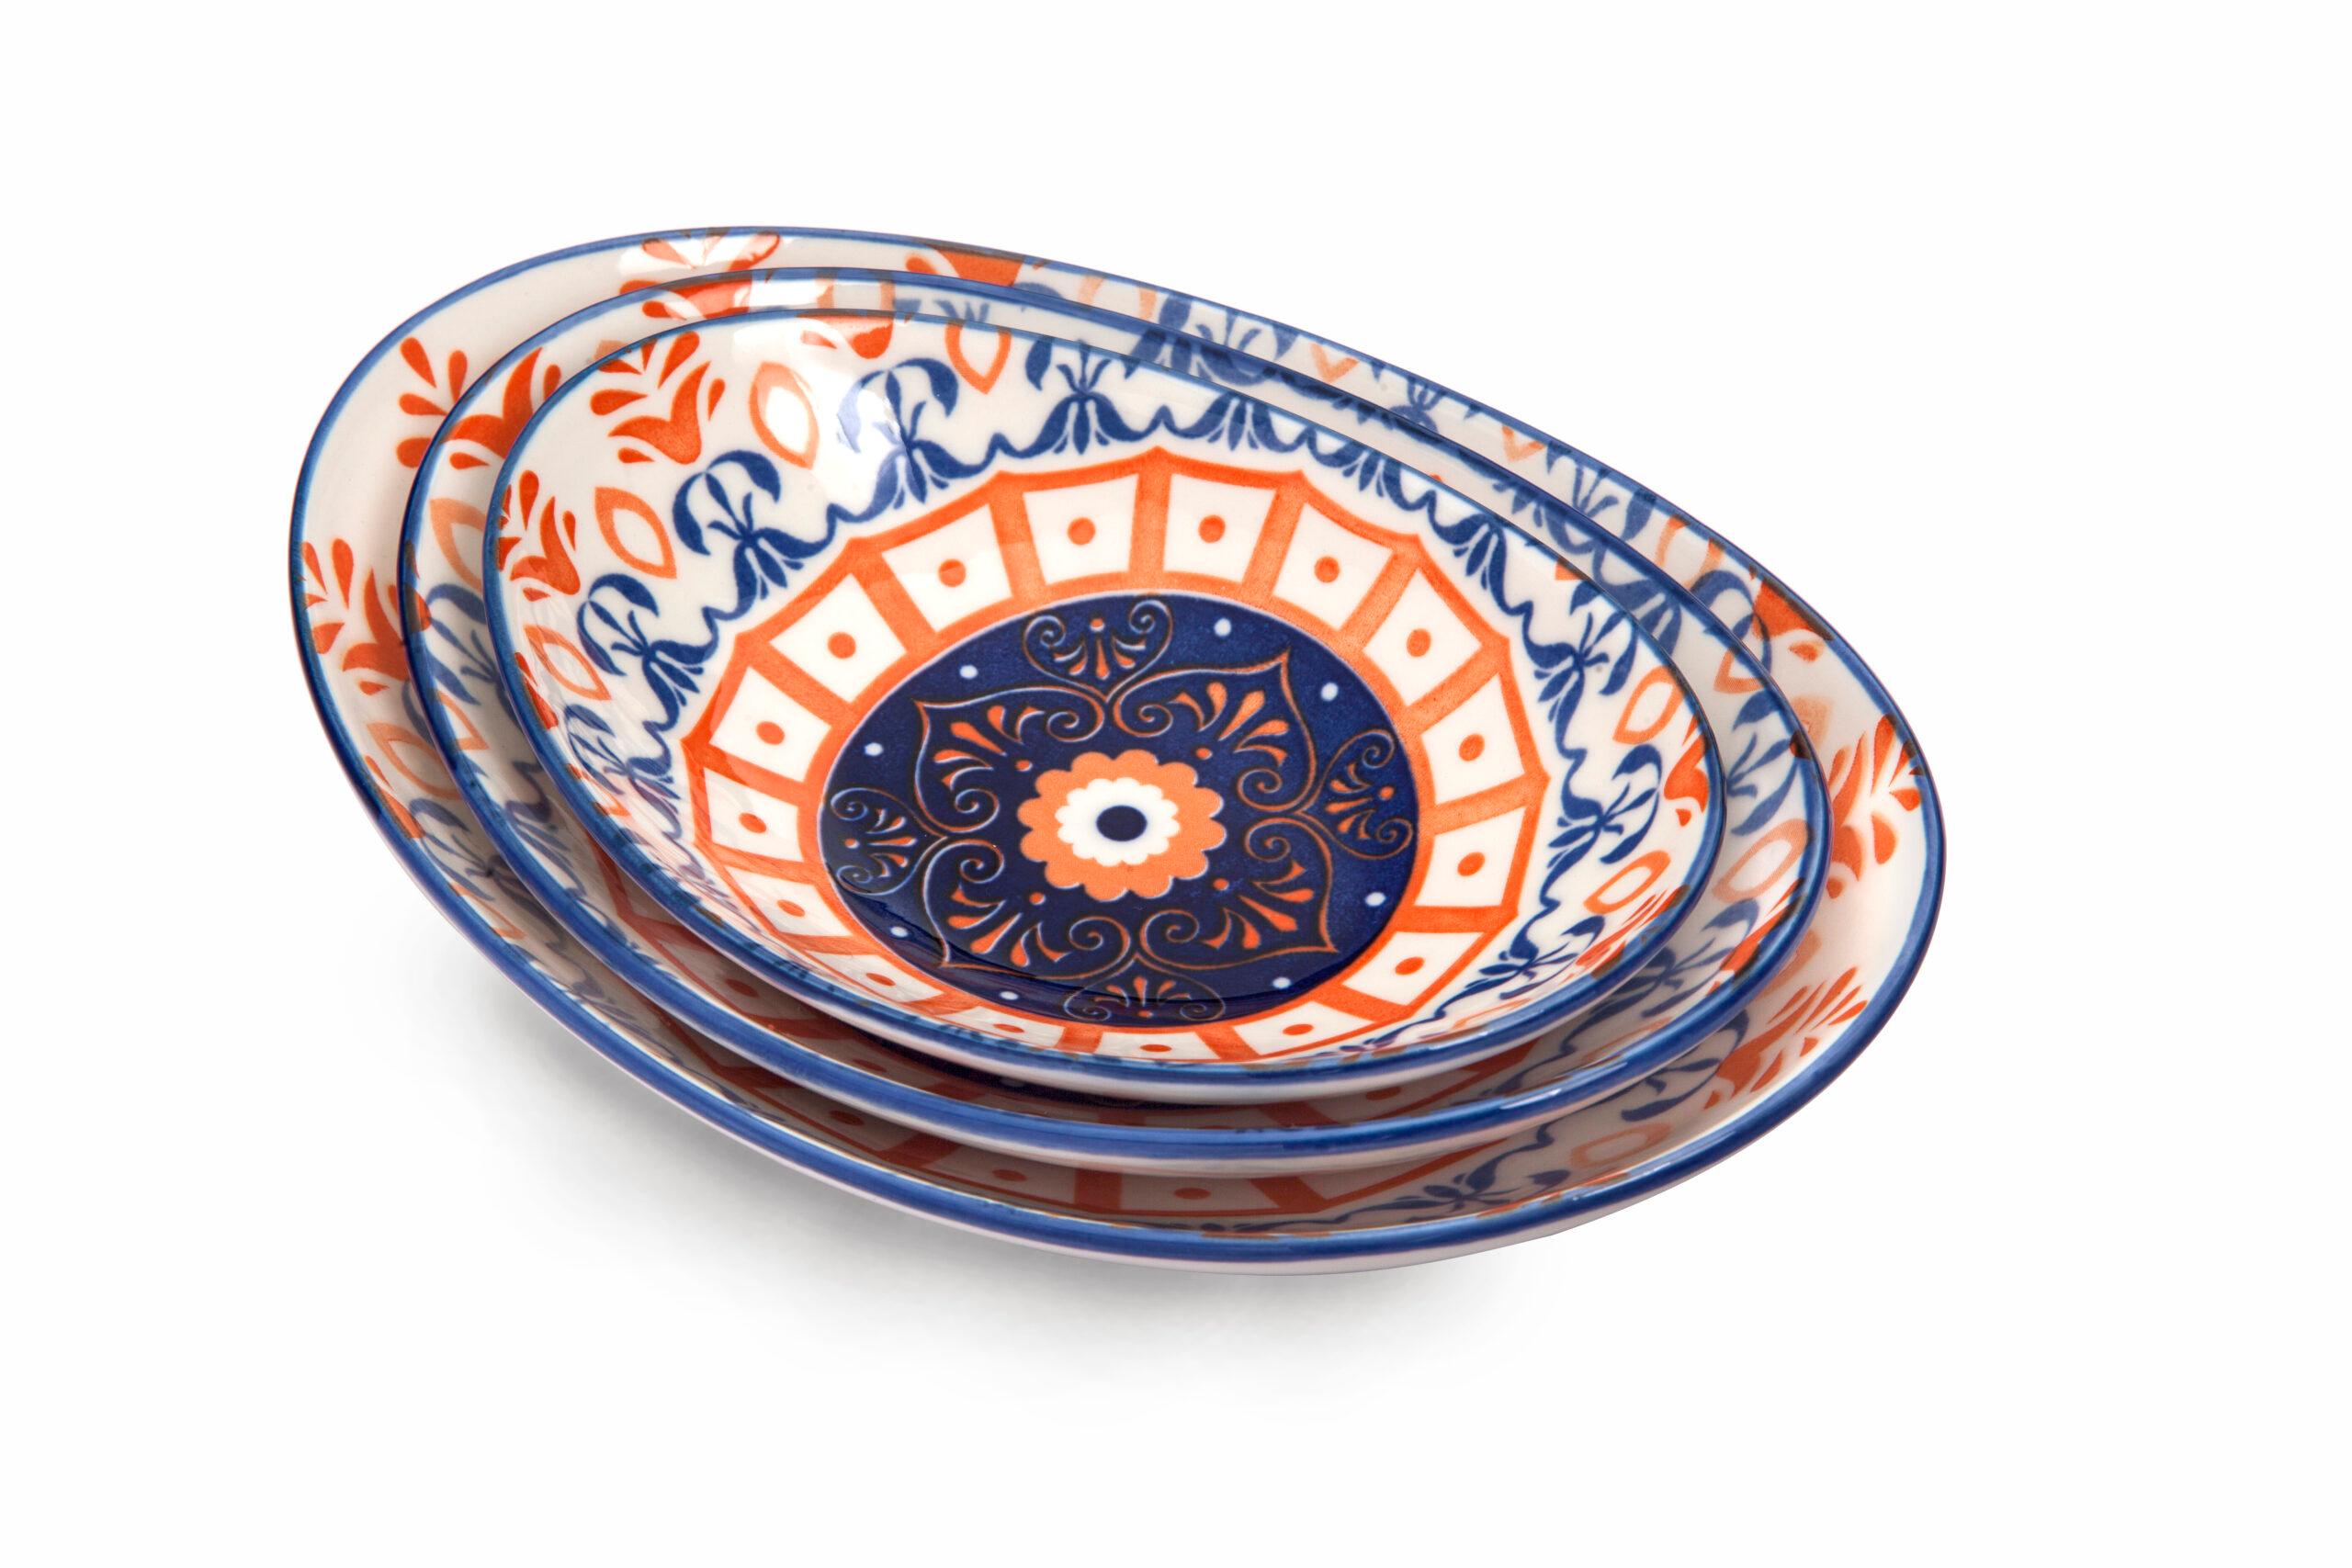 Che Brucia Henna Porcelain Oval Bowl 17.75 cm / 7" Ivory Orange Blue Porcelain